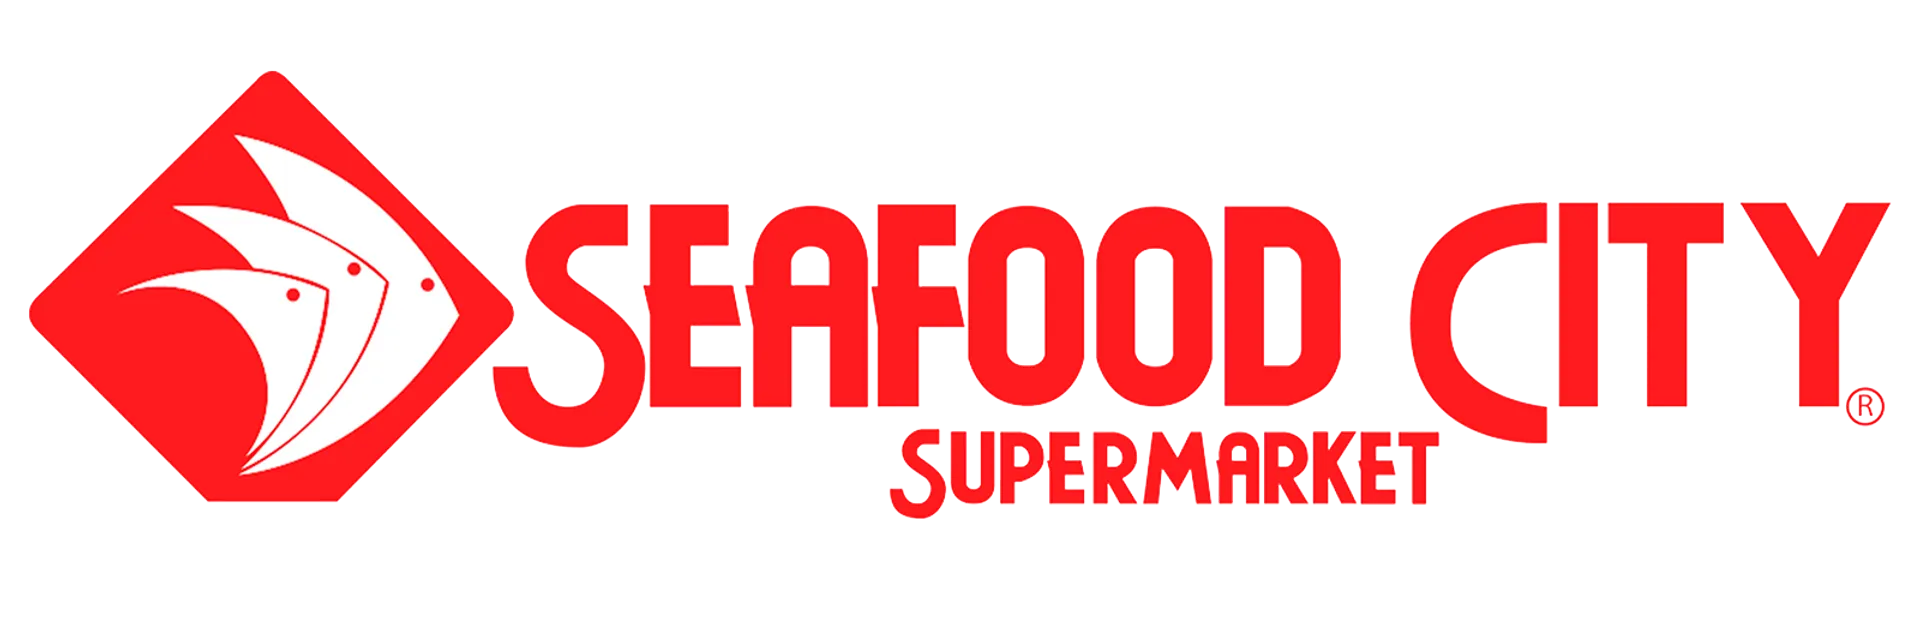 SEAFOOD CITY SUPERMARKET logo